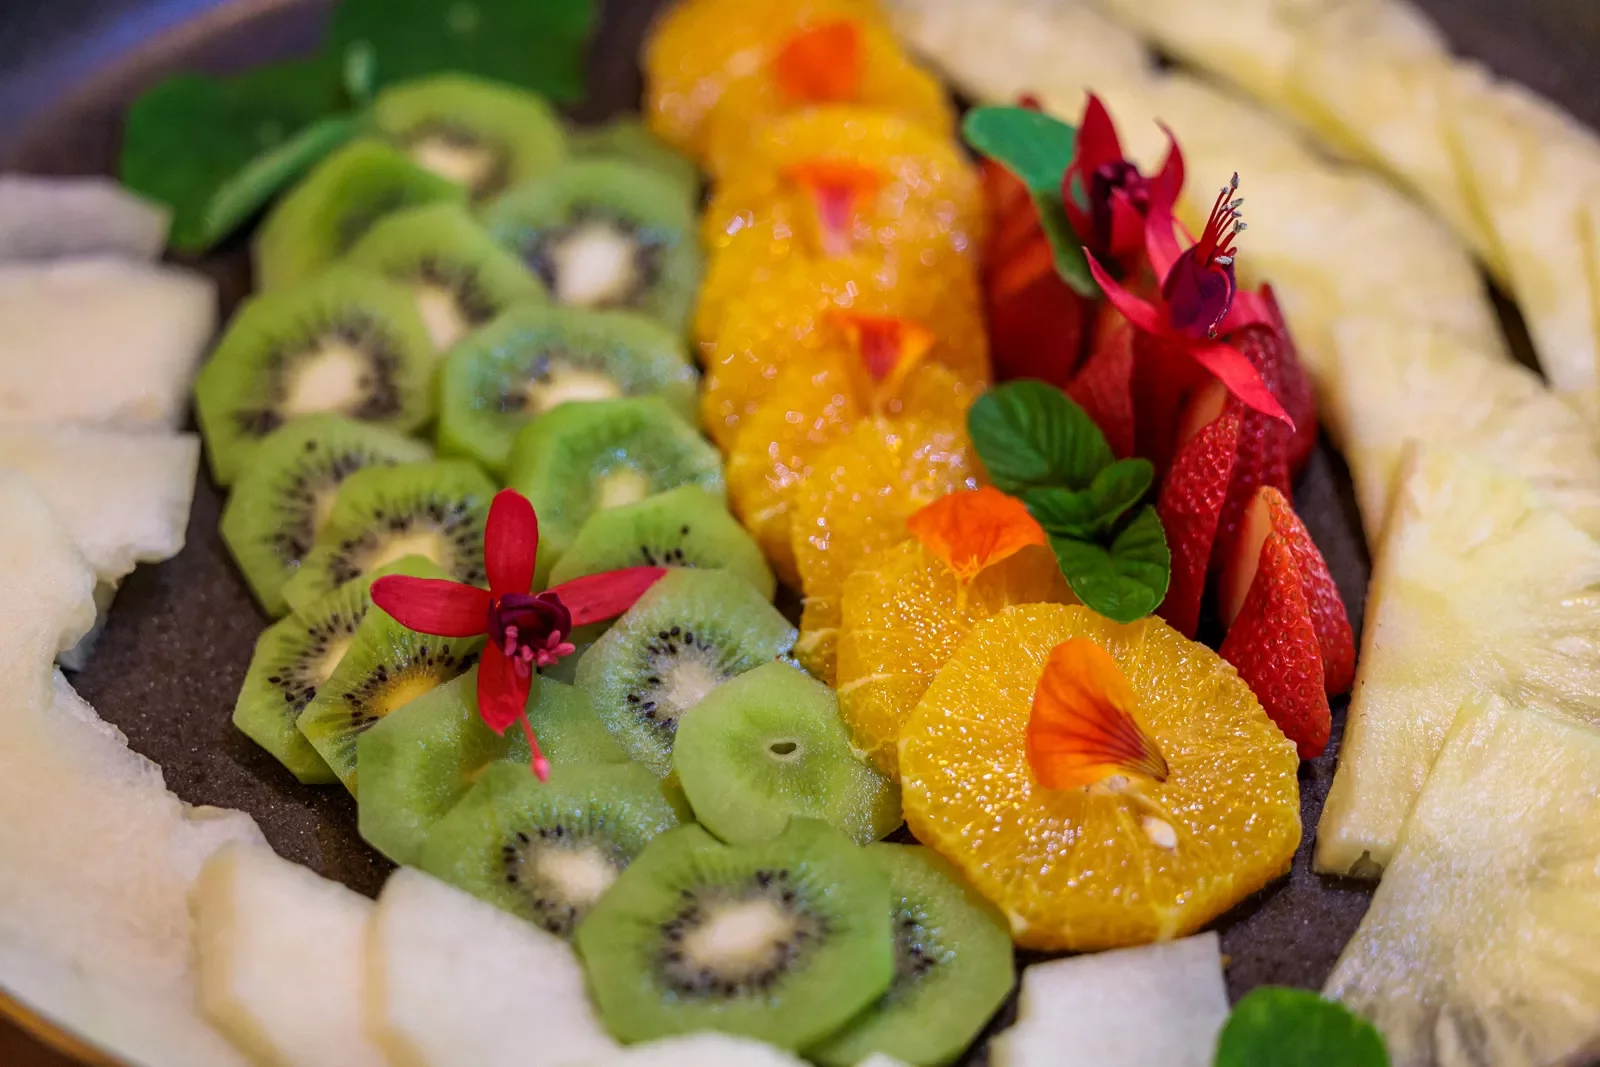 Plate full of sliced fruits, including kiwi, orange, strawberries and pineapple